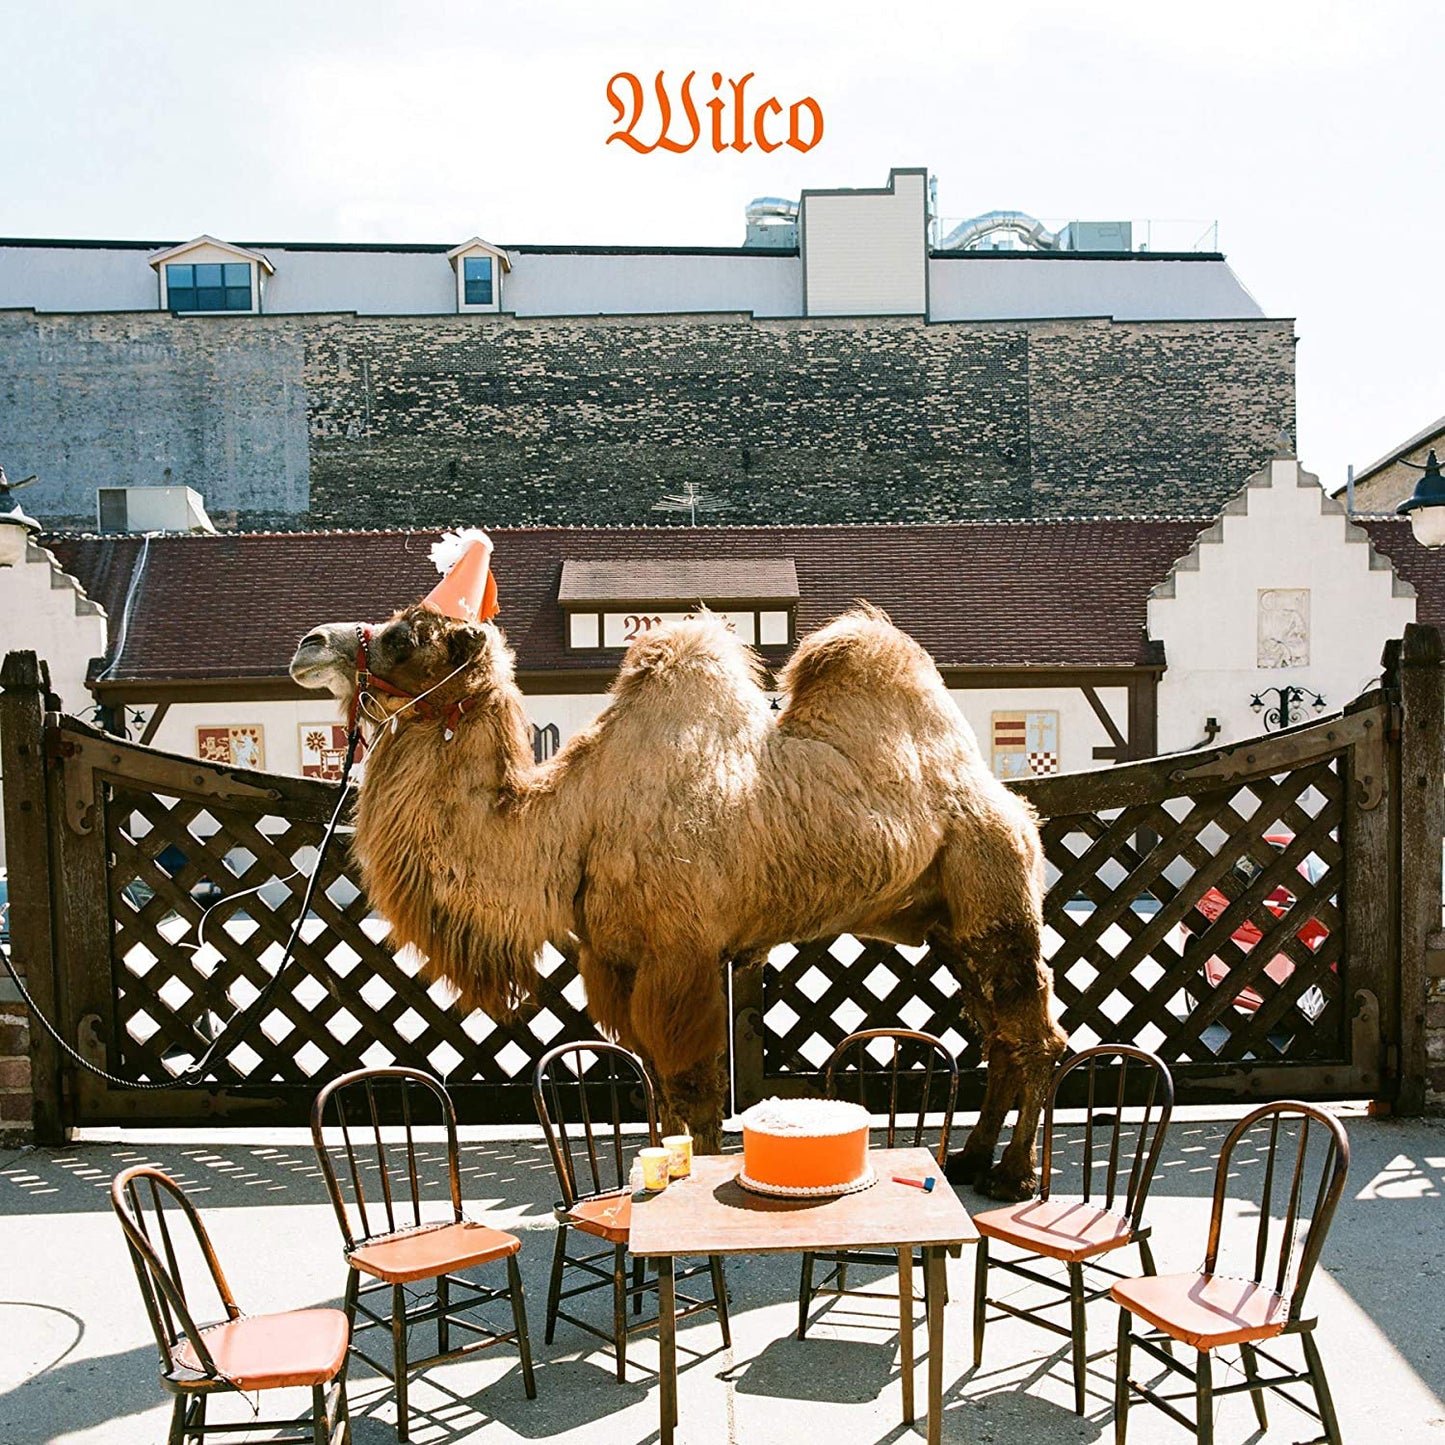 Wilco - Wilco (The Album) [2LP+CD]